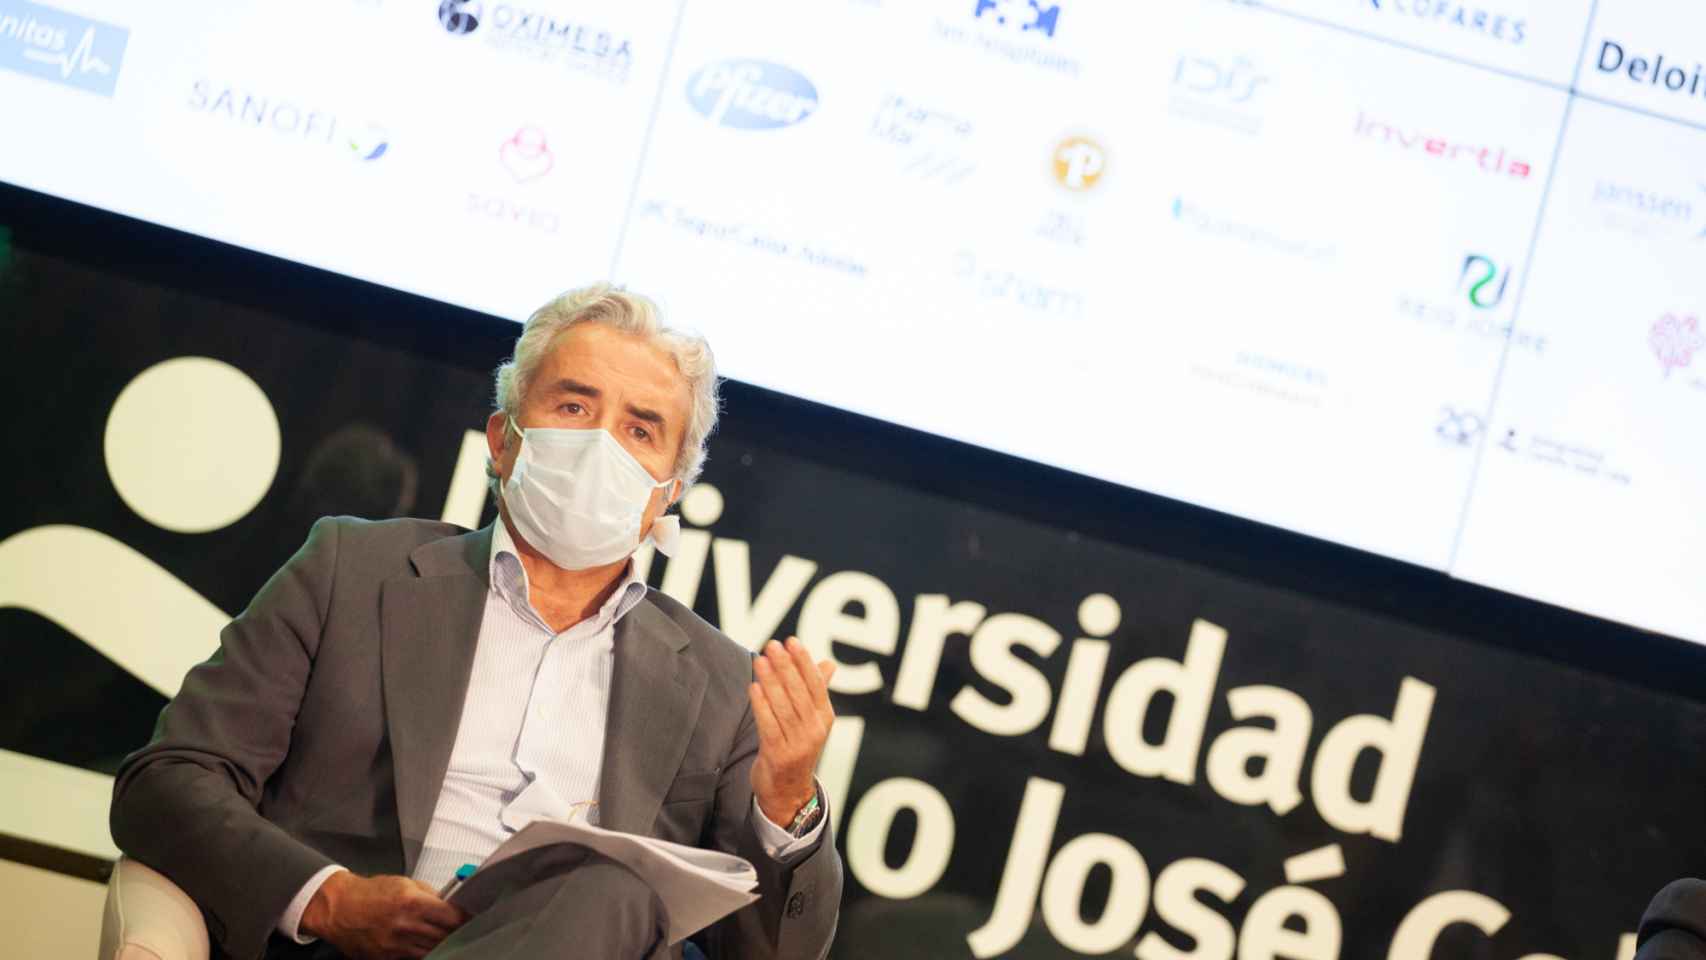 Iñaki Ereño, CEO de Sanitas.